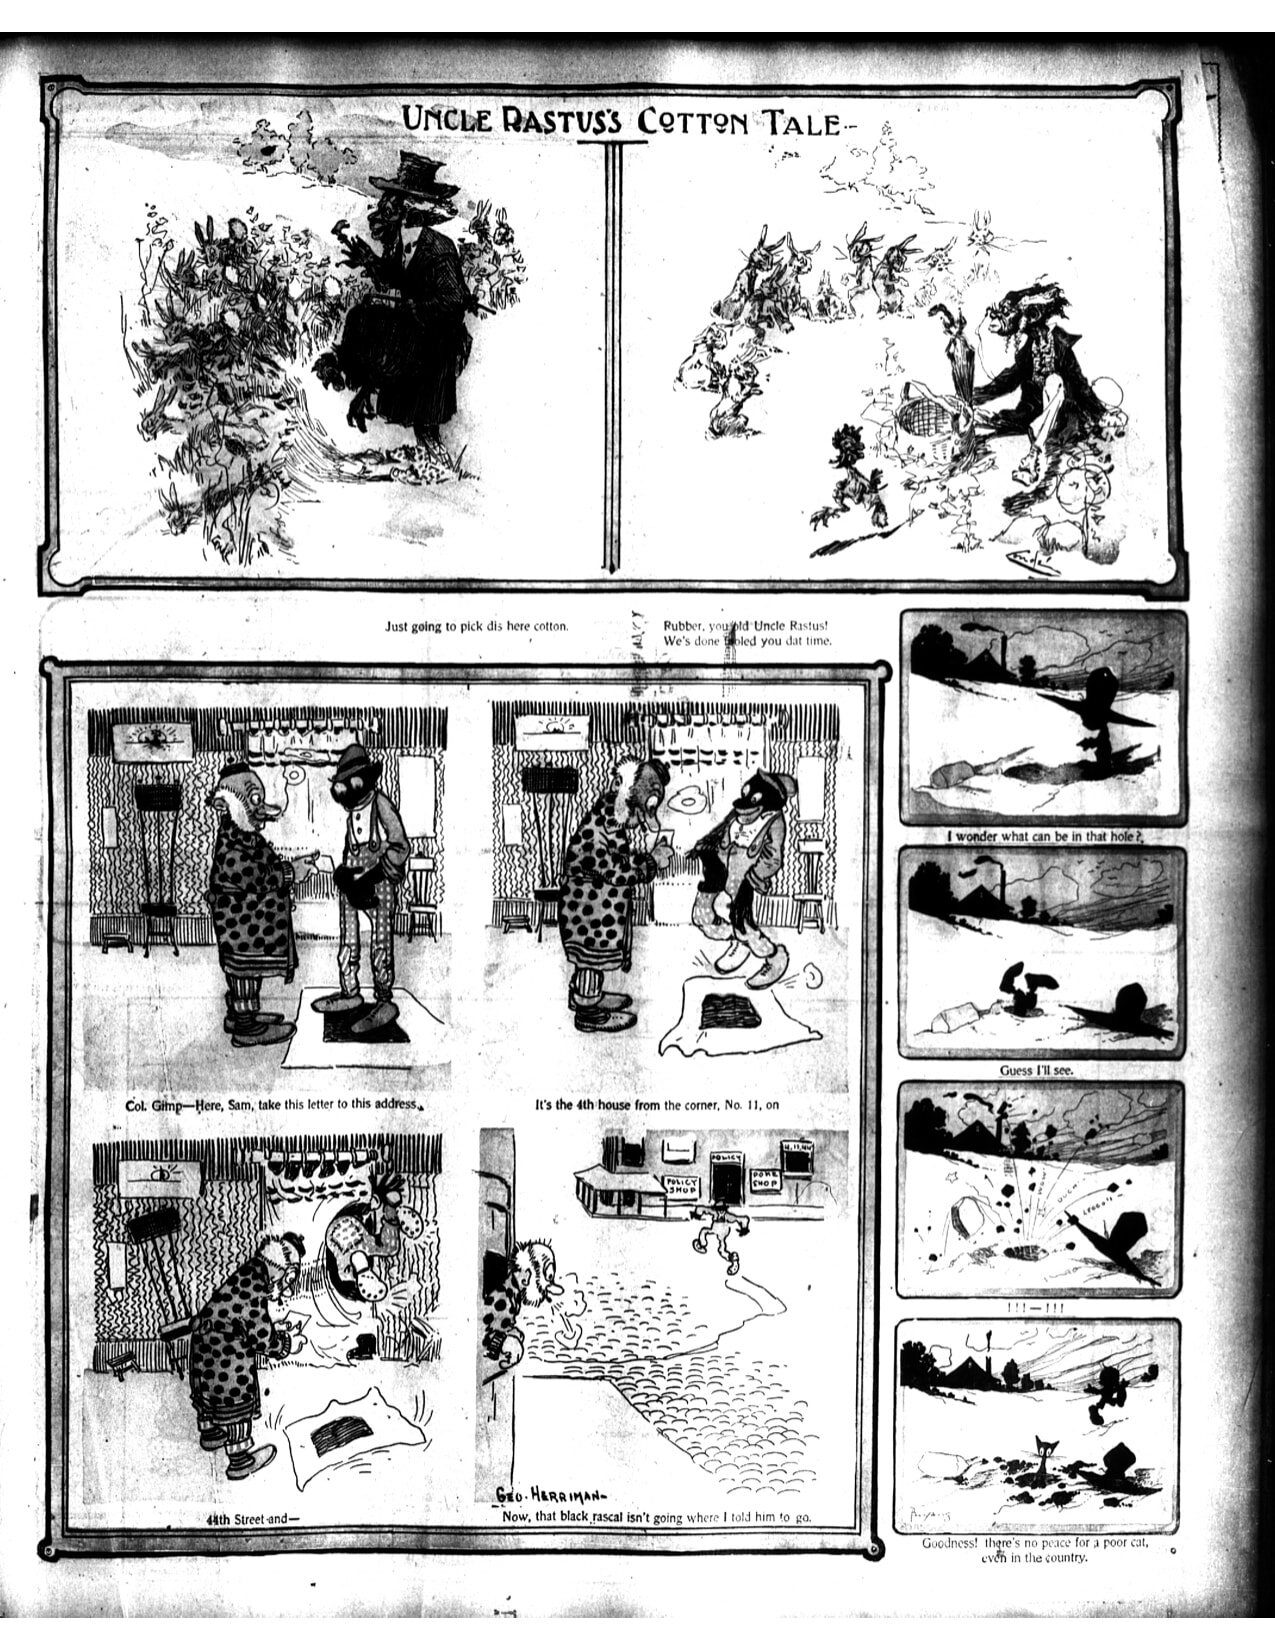 05-nyp-10-20-1901-herriman-comic.jpg